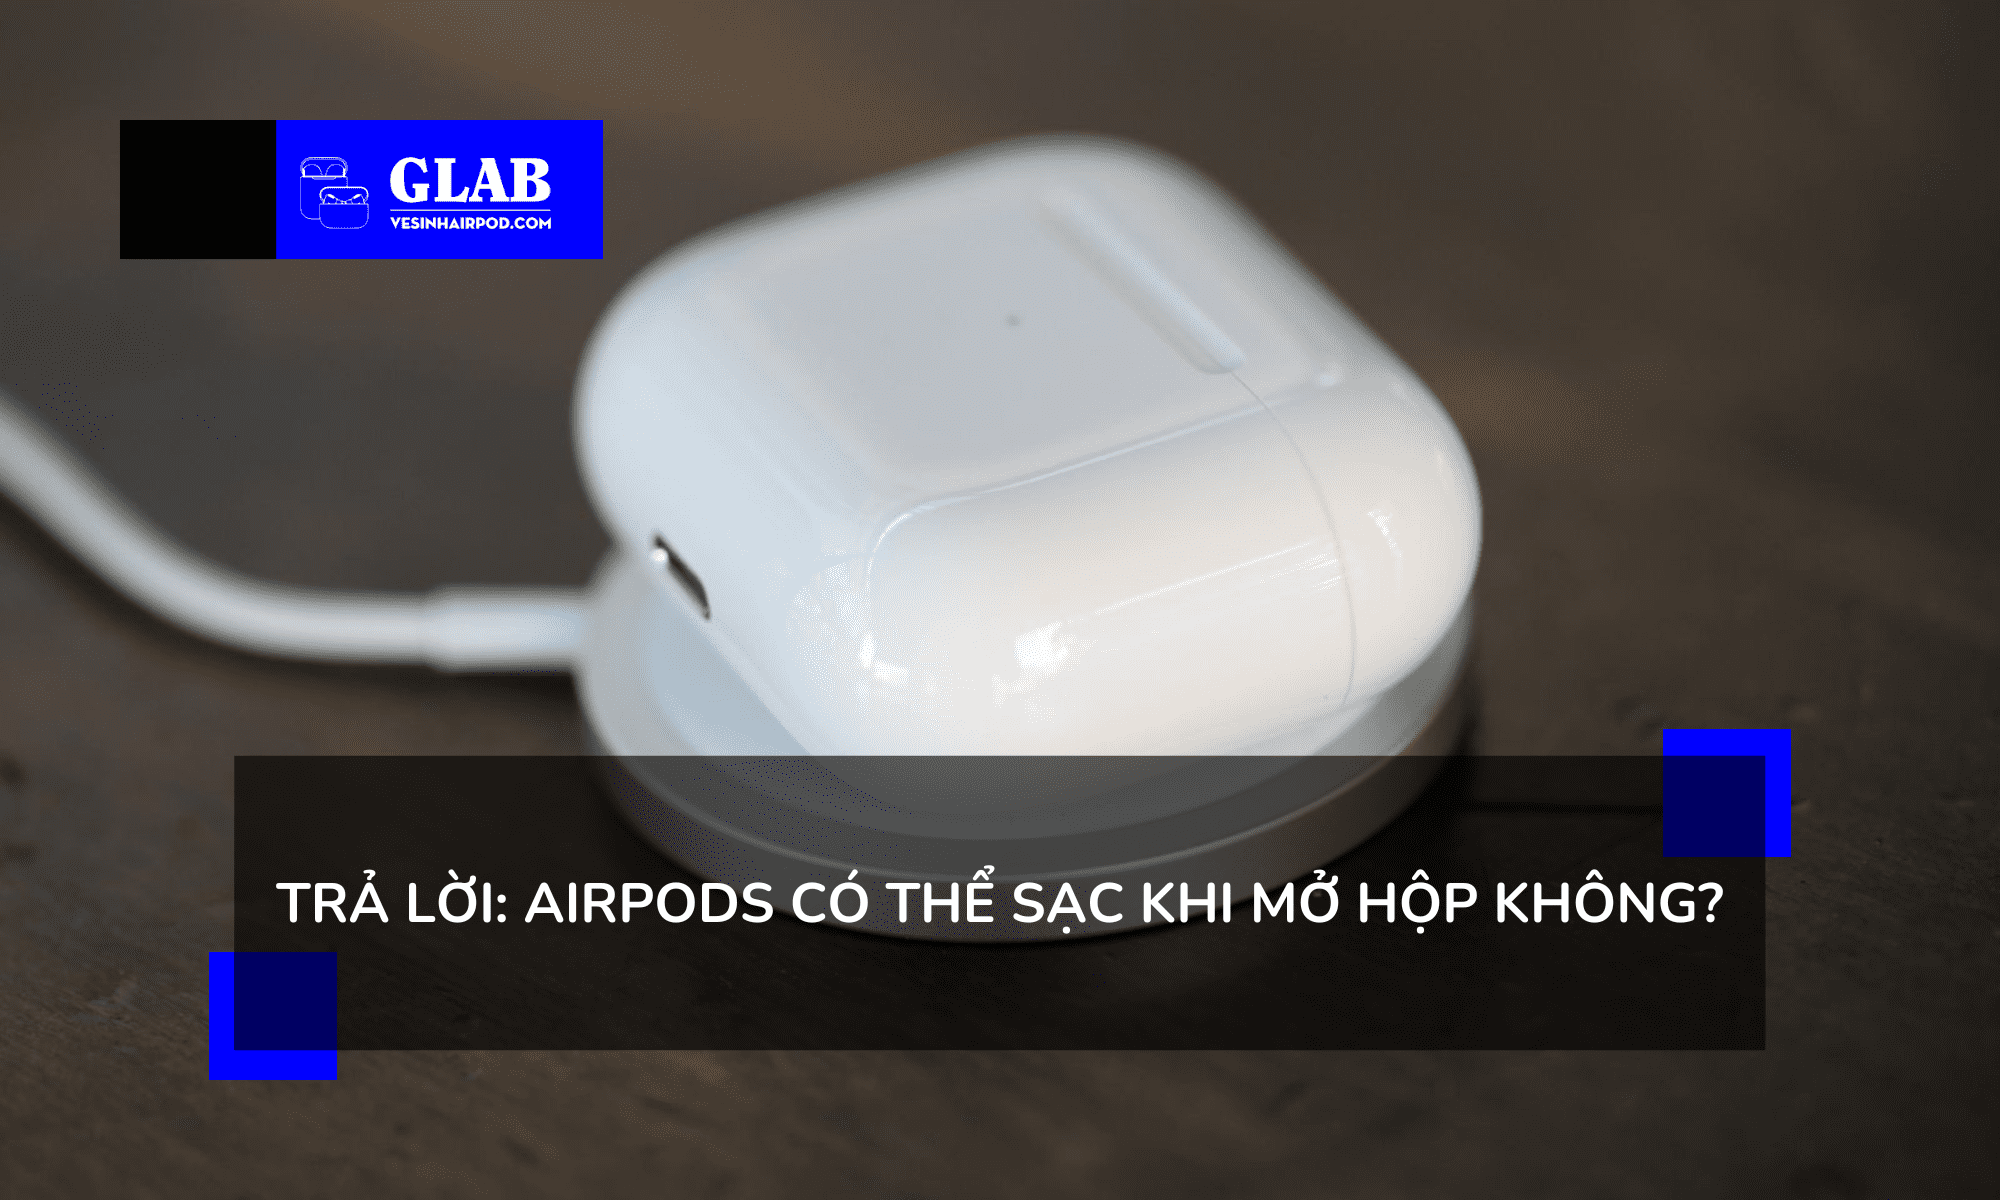 airpods-co-the-sac-khi-mo-hop-khong